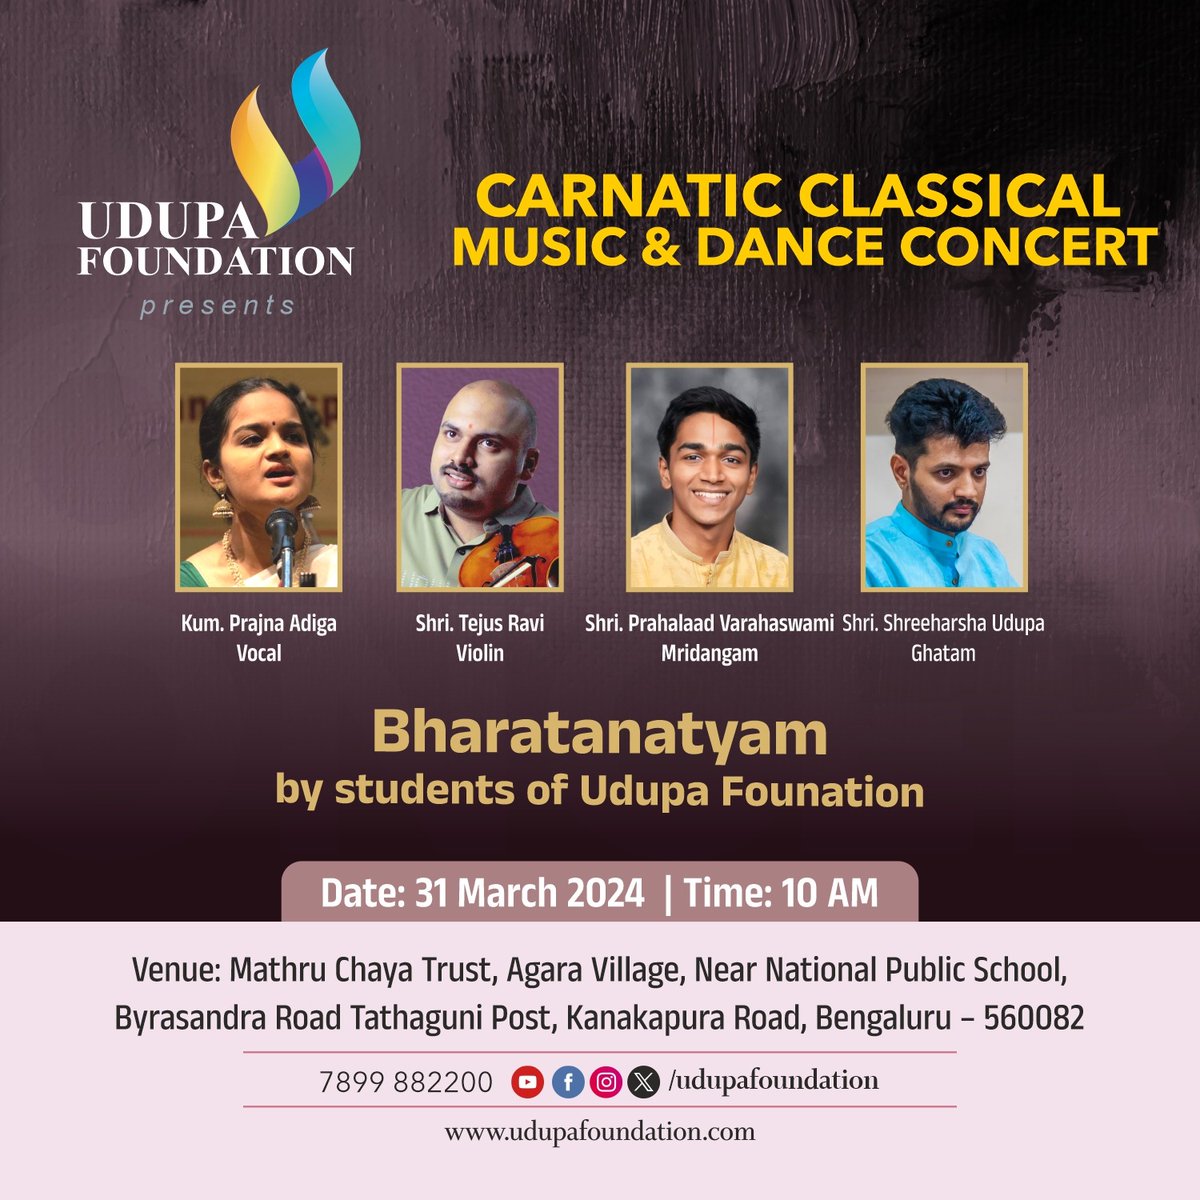 Udupa Foundation presents ‘Carnatic Classical Concert’ and Bharatanatyam performance at Mathru Chaya Trust, Agara Village, Near NPS, Kanakapura Road, Bengaluru on 31 Mar 2024, Sunday at 10 AM. All are Welcome! #UdupaFoundation #JoyOfPerforming #SpreadTheArt #OldAgeHome #Bengaluru